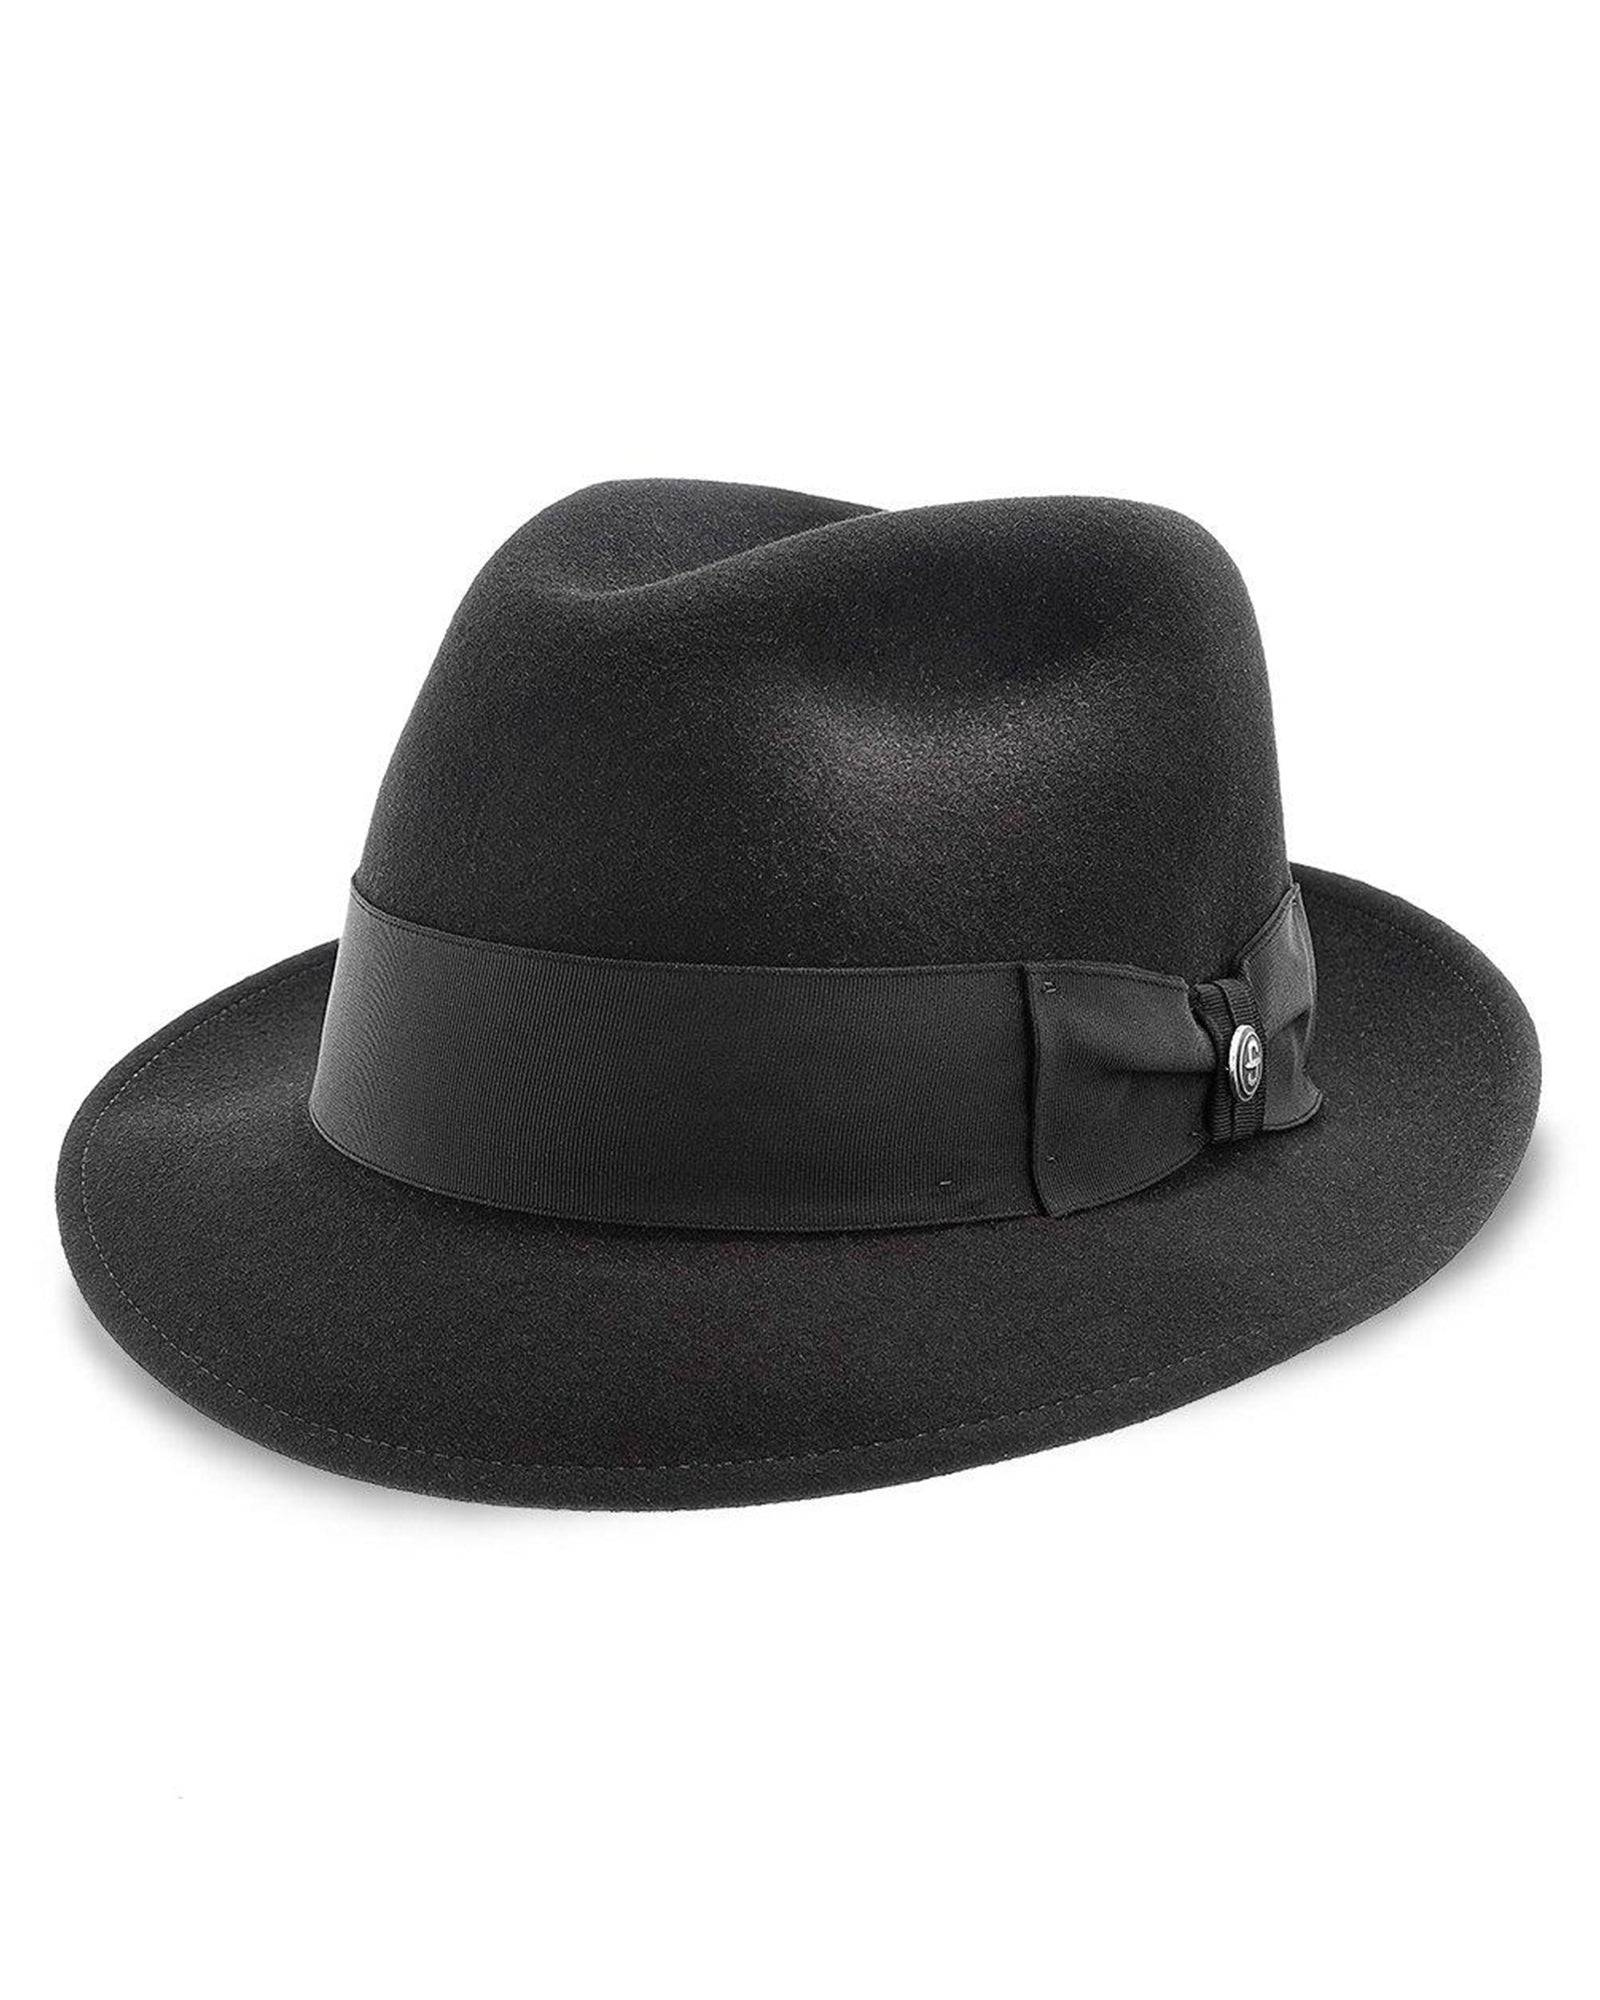 Stetson Frederick Wool Felt Fedora Hat in Black - Rainwater's Men's Clothing and Tuxedo Rental